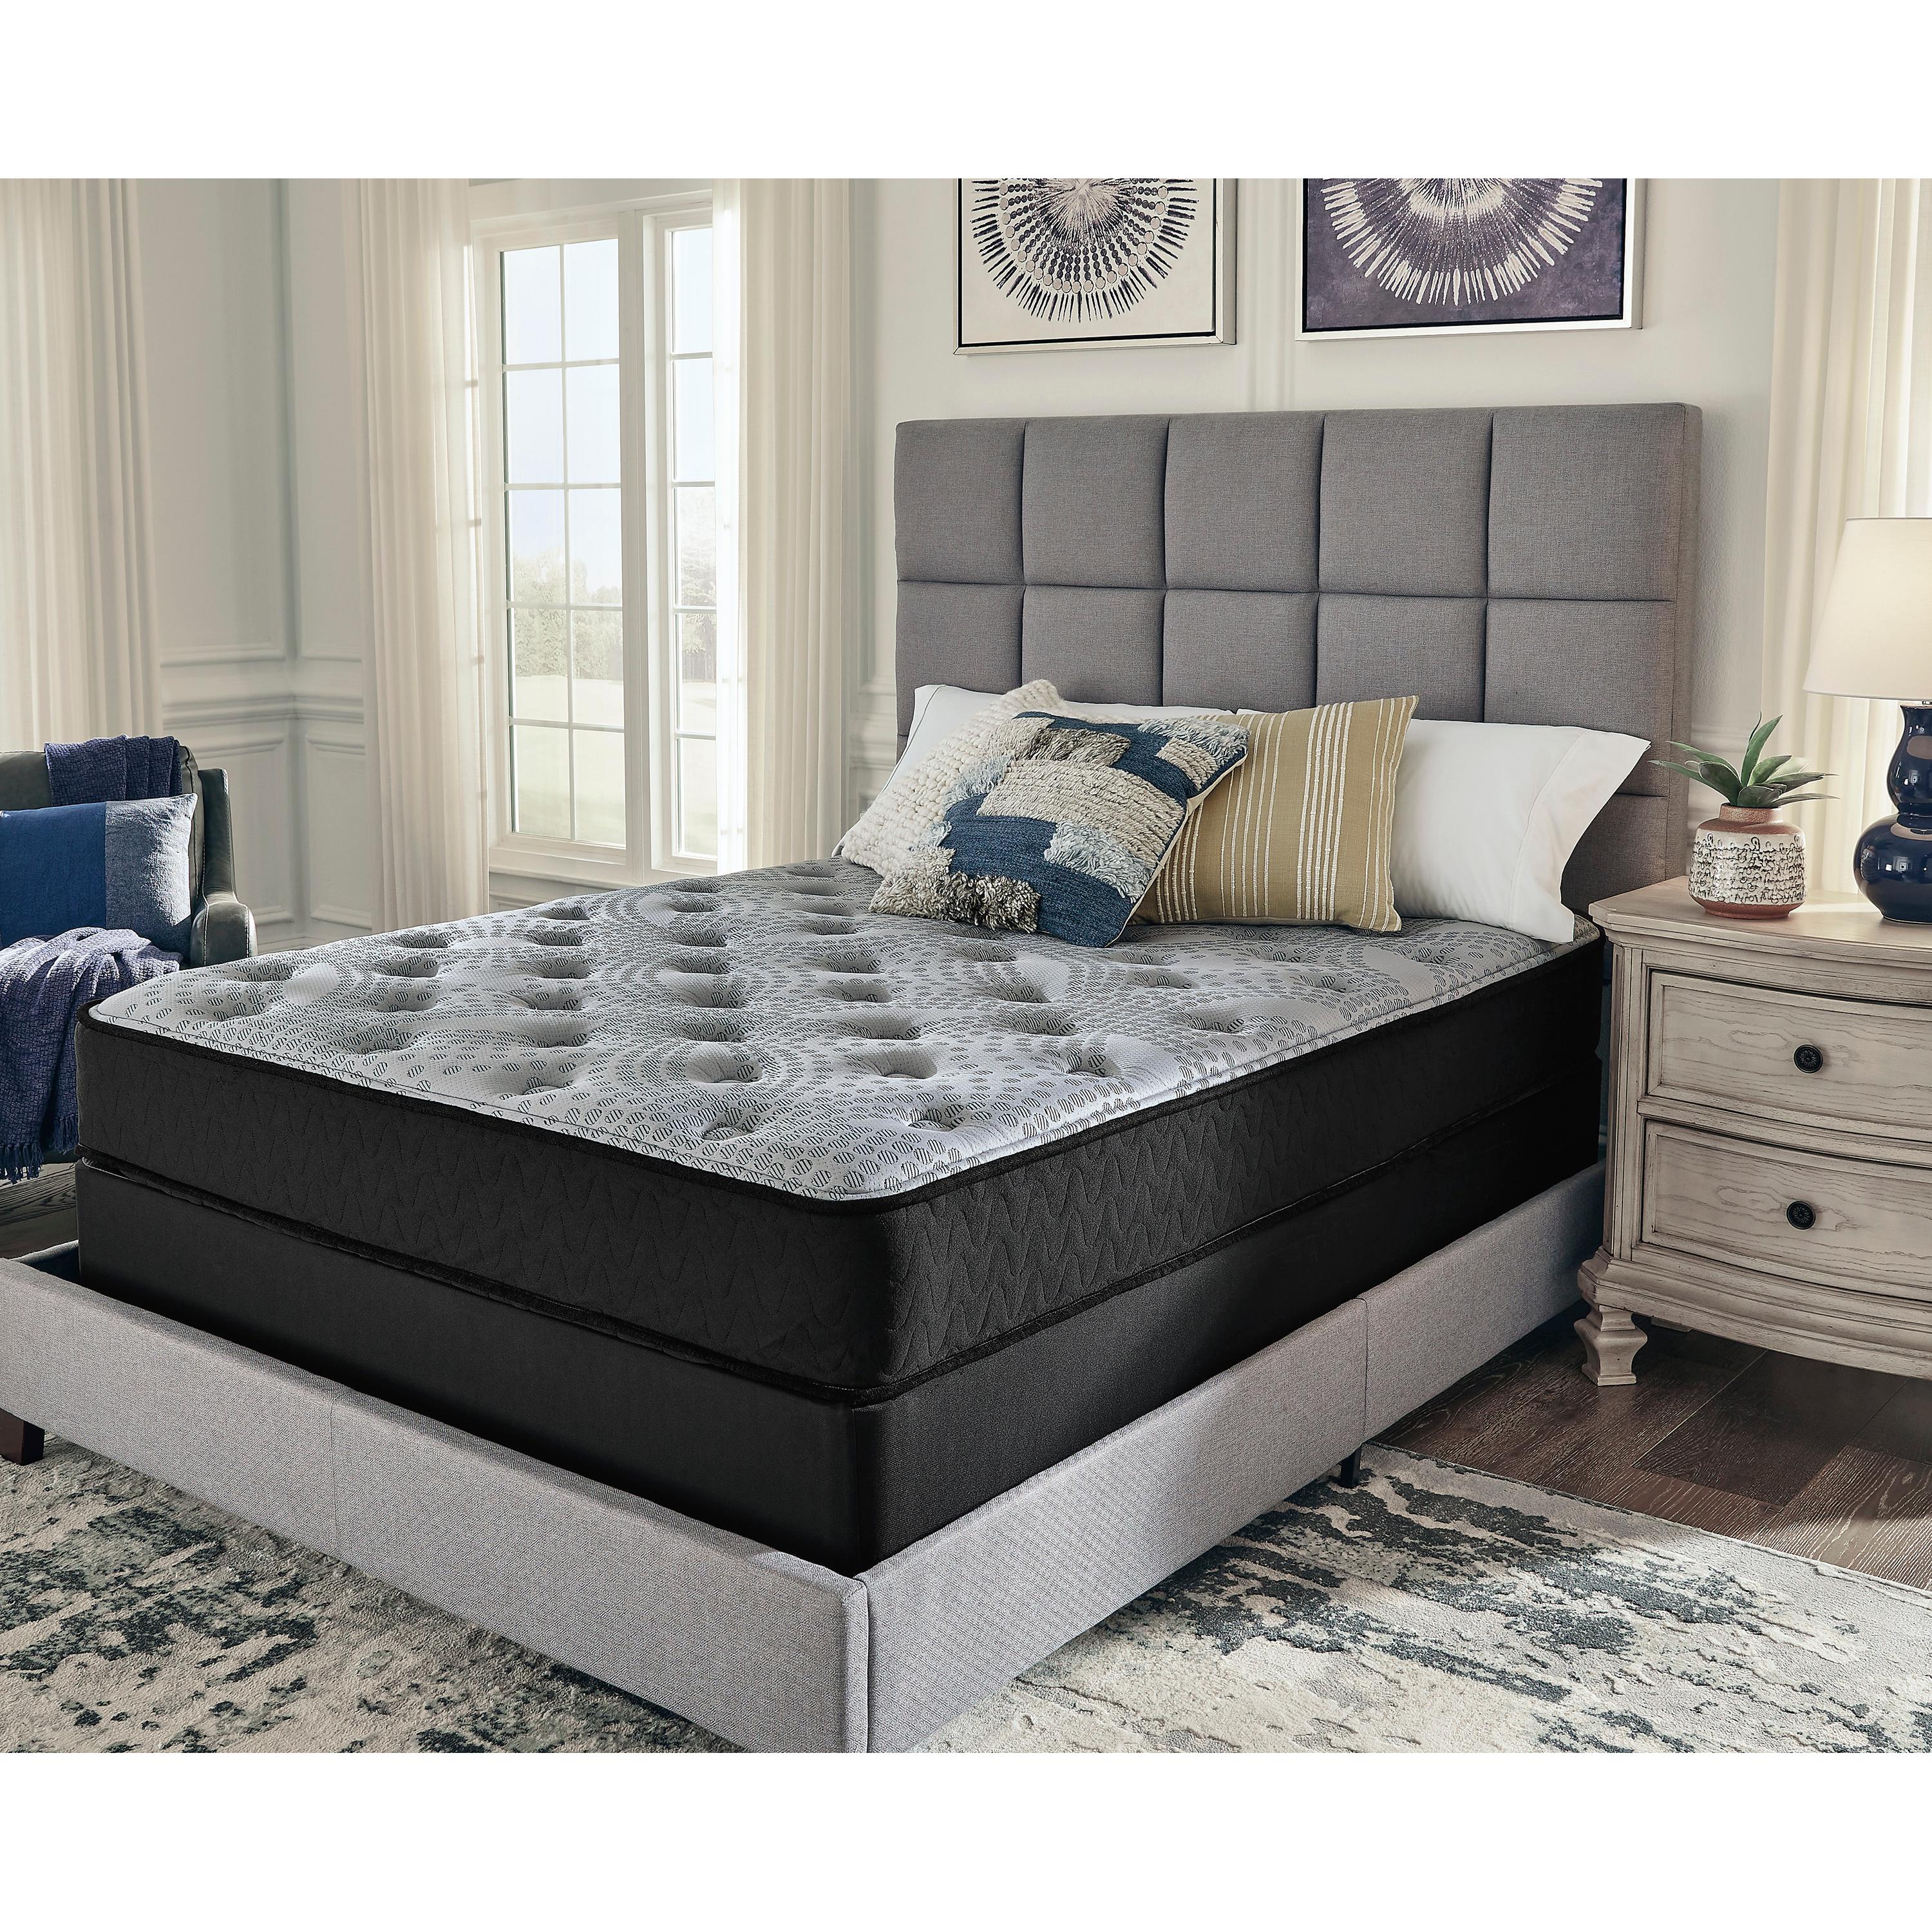 Sierra Sleep Comfort Plus M50921 Full Mattress